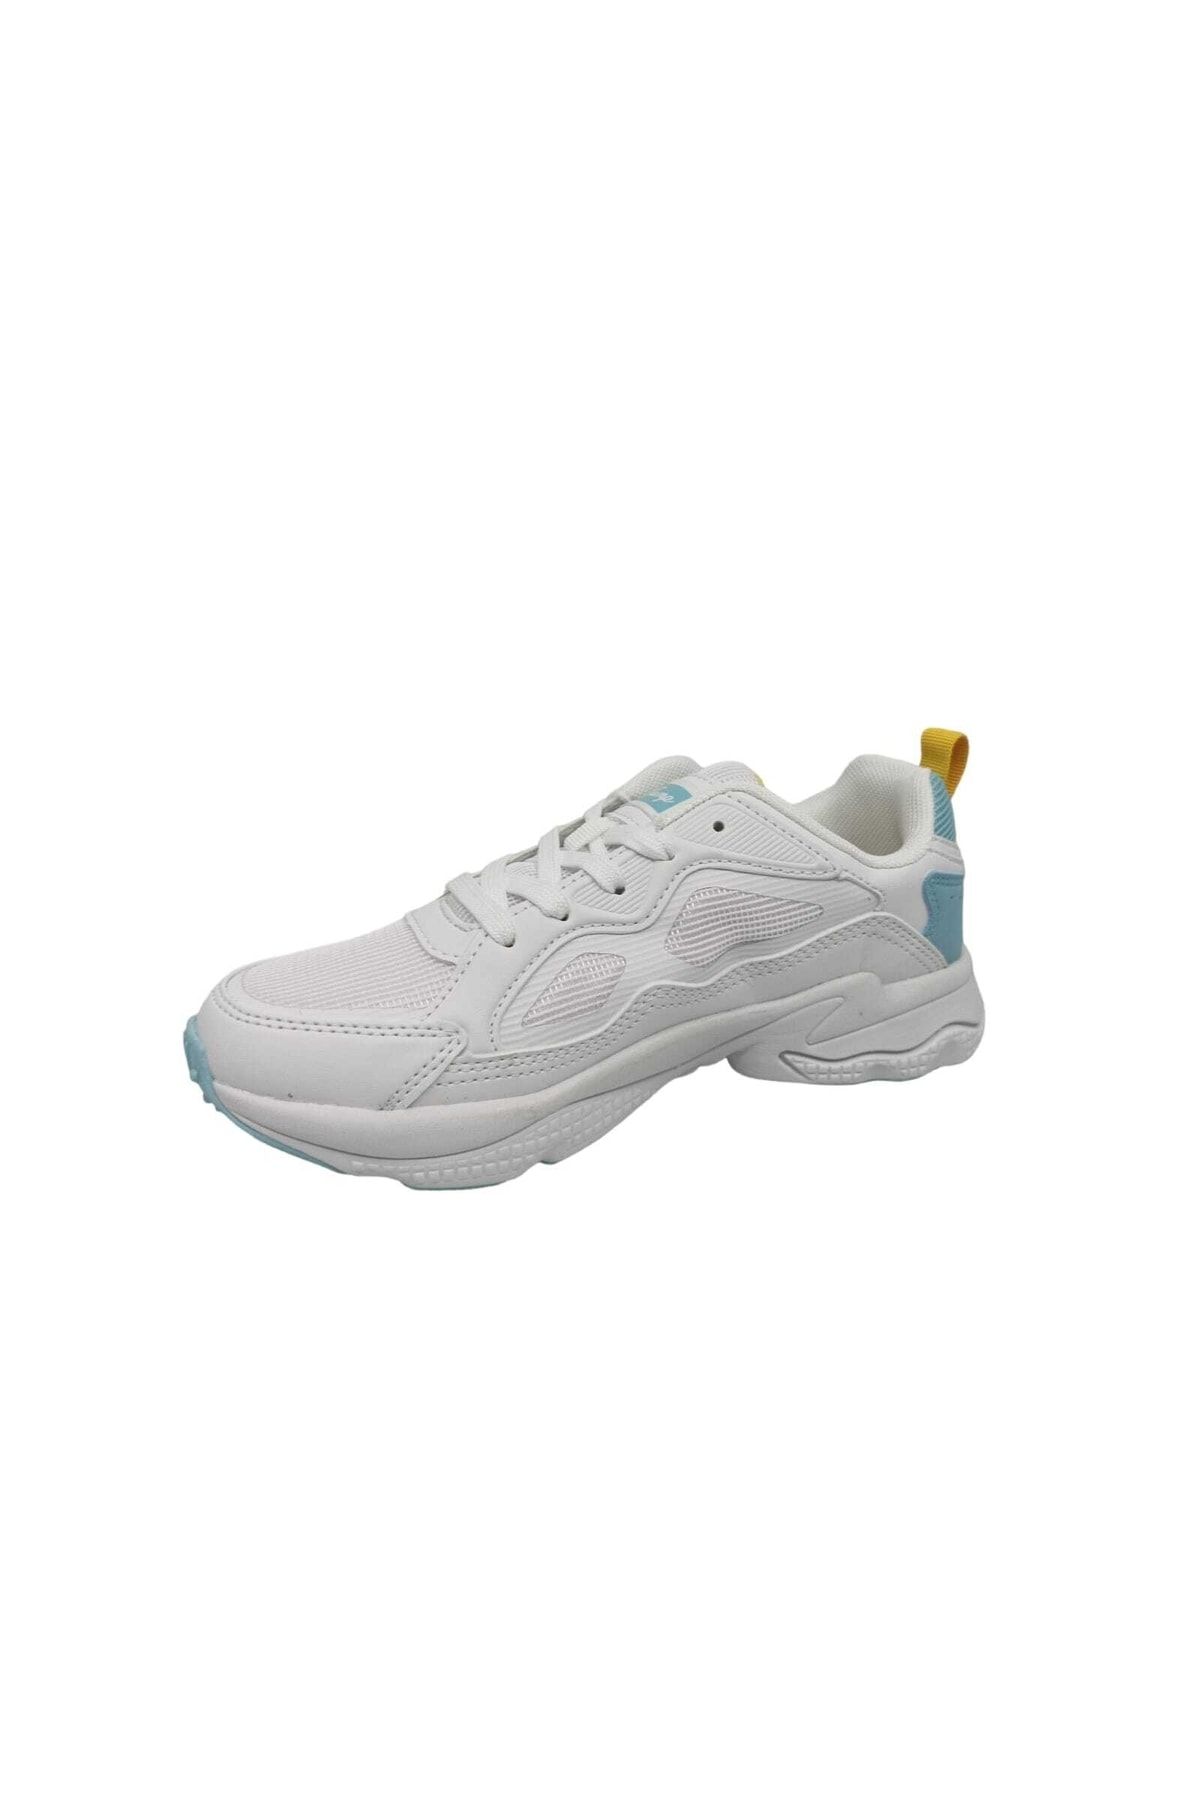 Jump کفش ورزشی دویدن پیاده روی زنانه بنددار سفید 24711